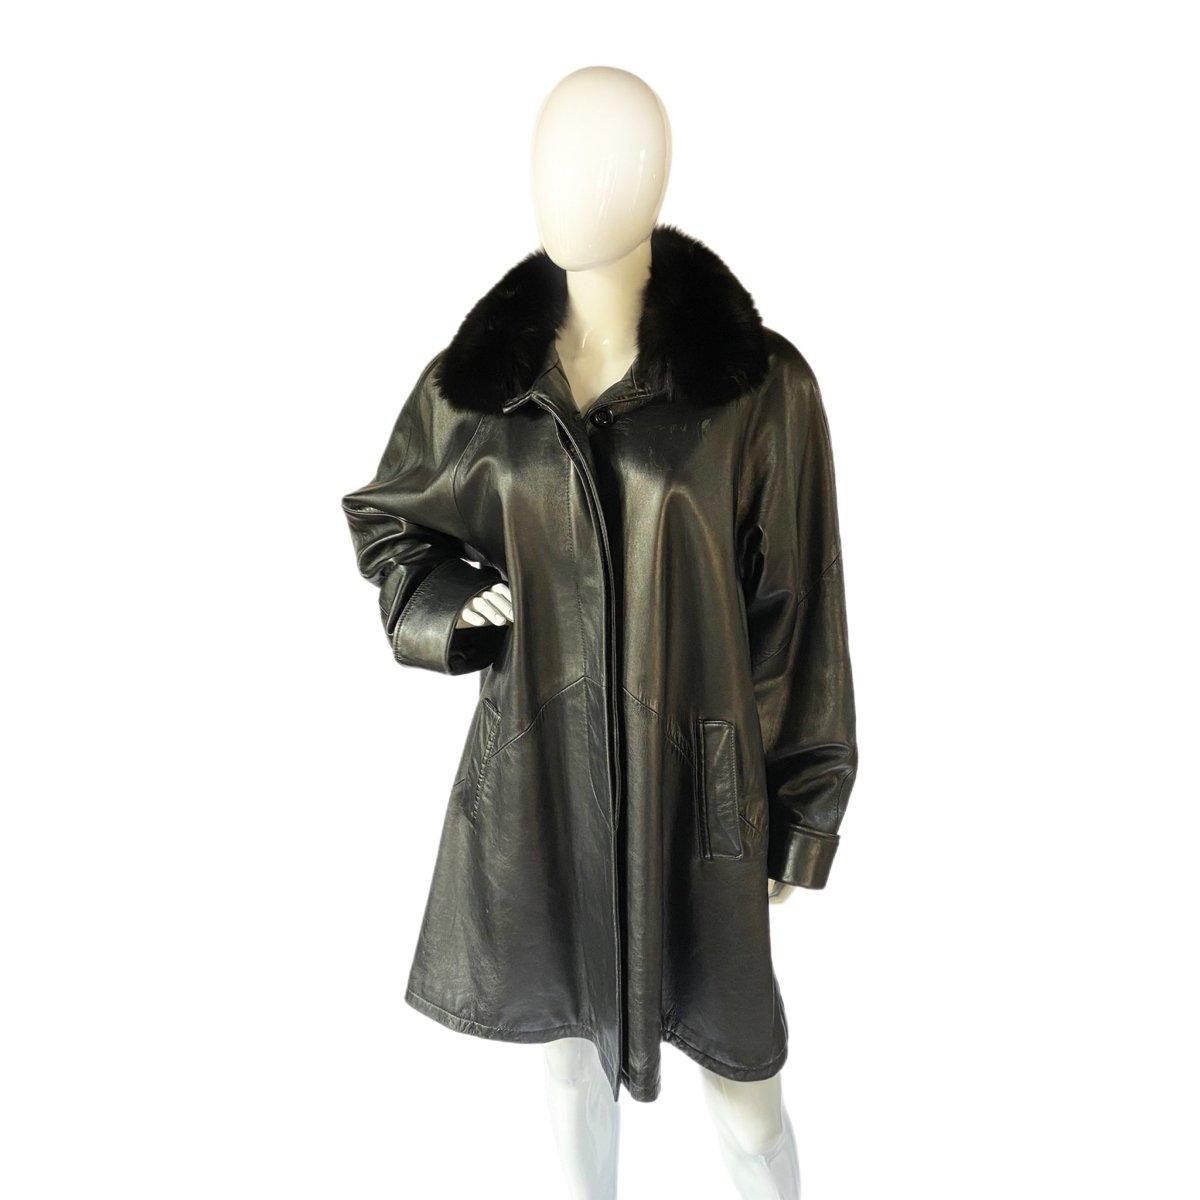 Givenchy Leather Jacket - Nataly Aponte